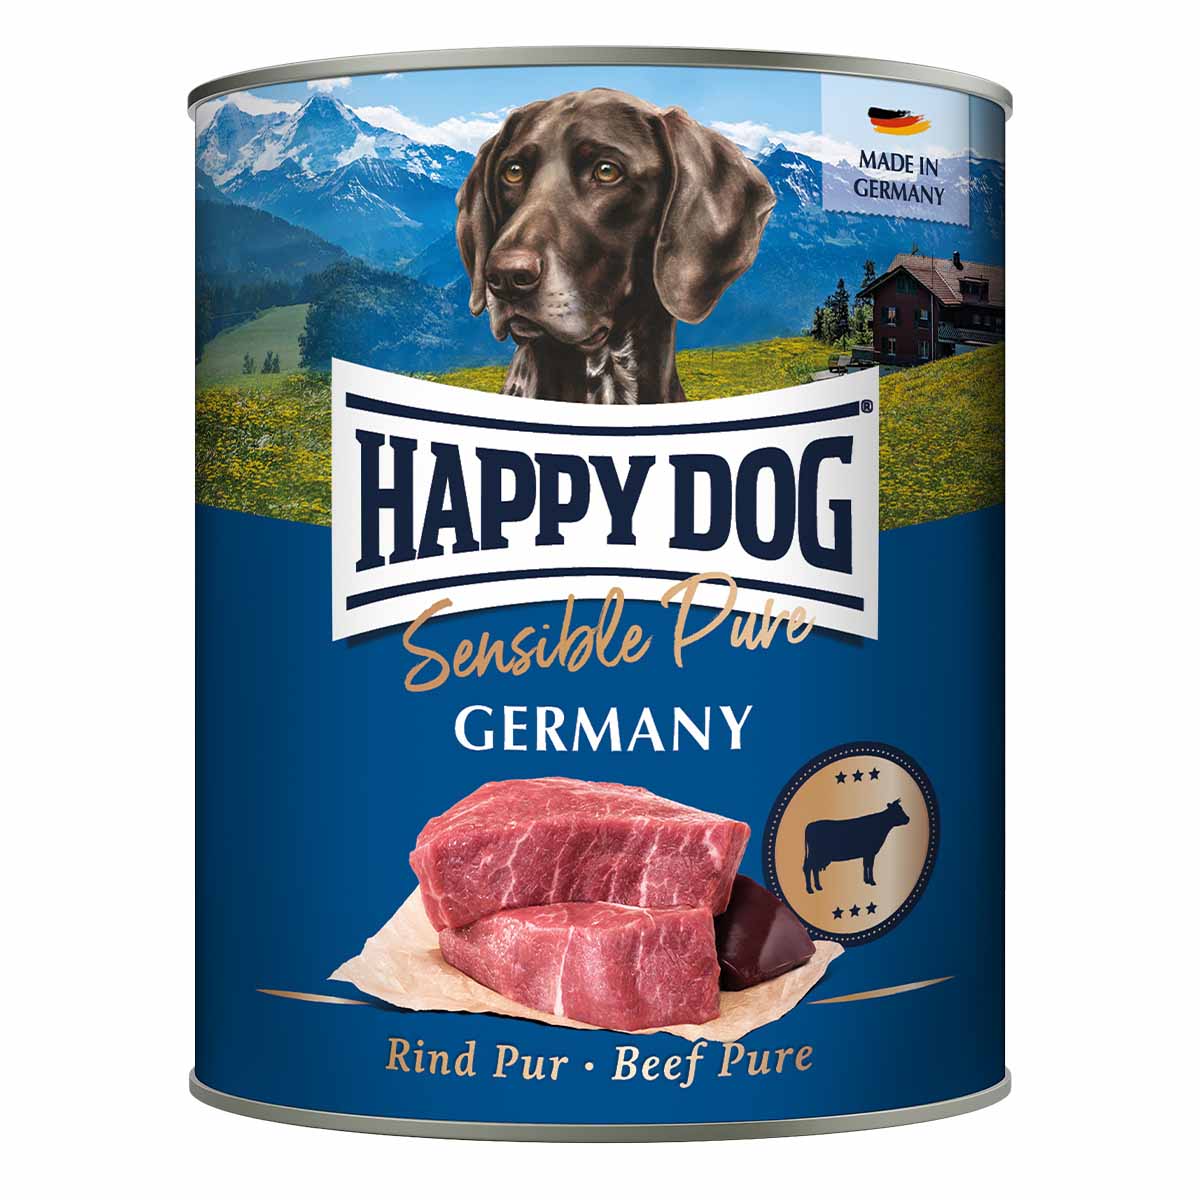 Happy Dog Sensible Pure Germany (Rind) 6x800g